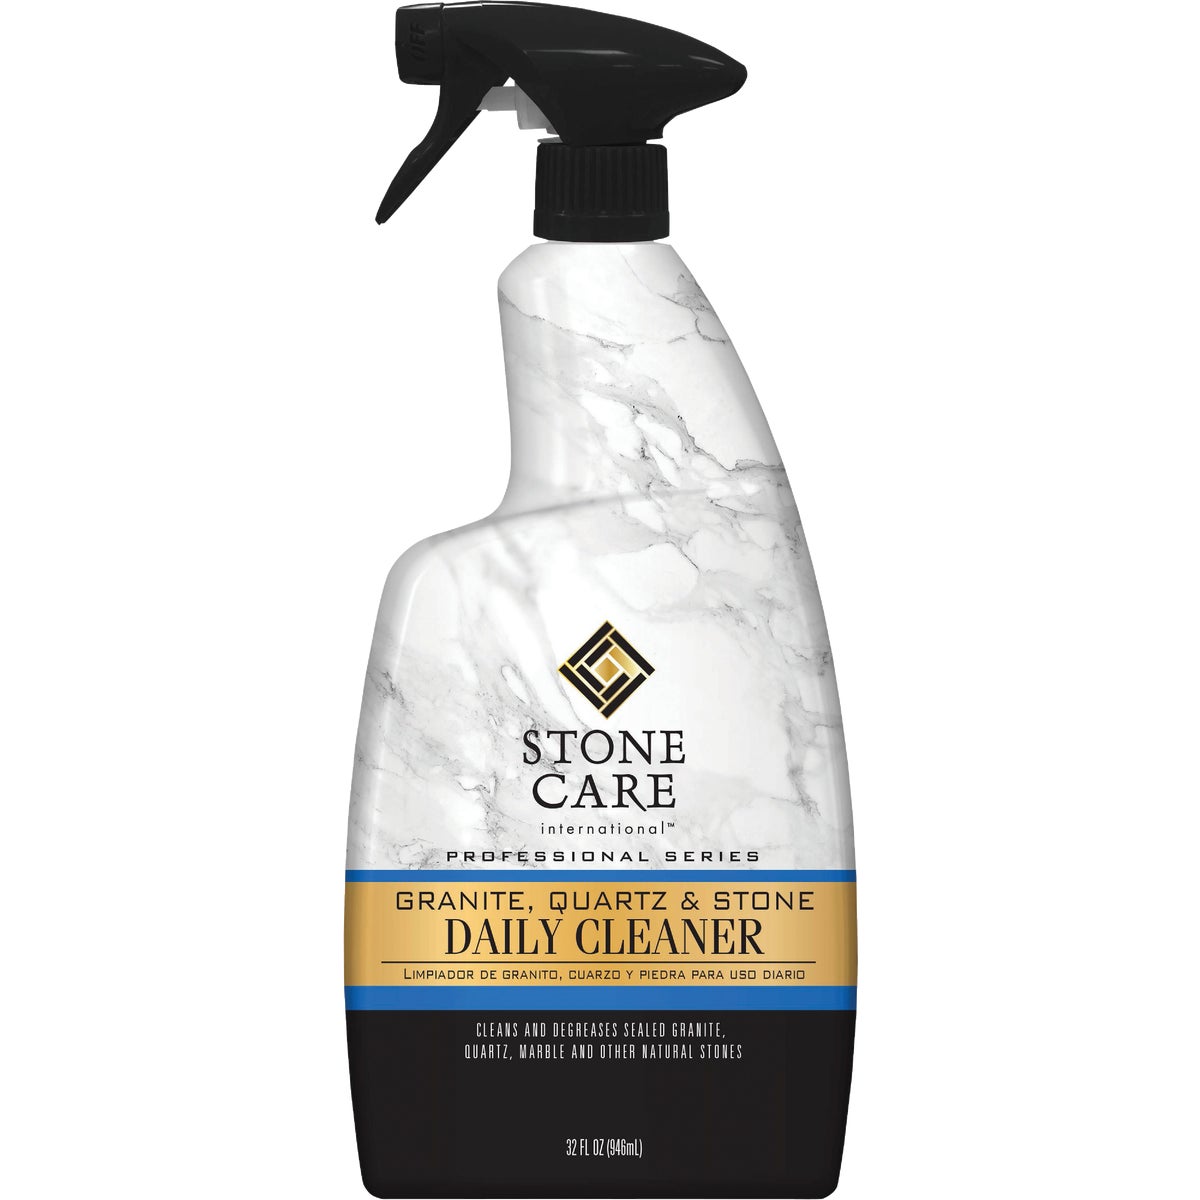 Item 600264, Natural stone countertop cleaner for granite, quartz, and stone.